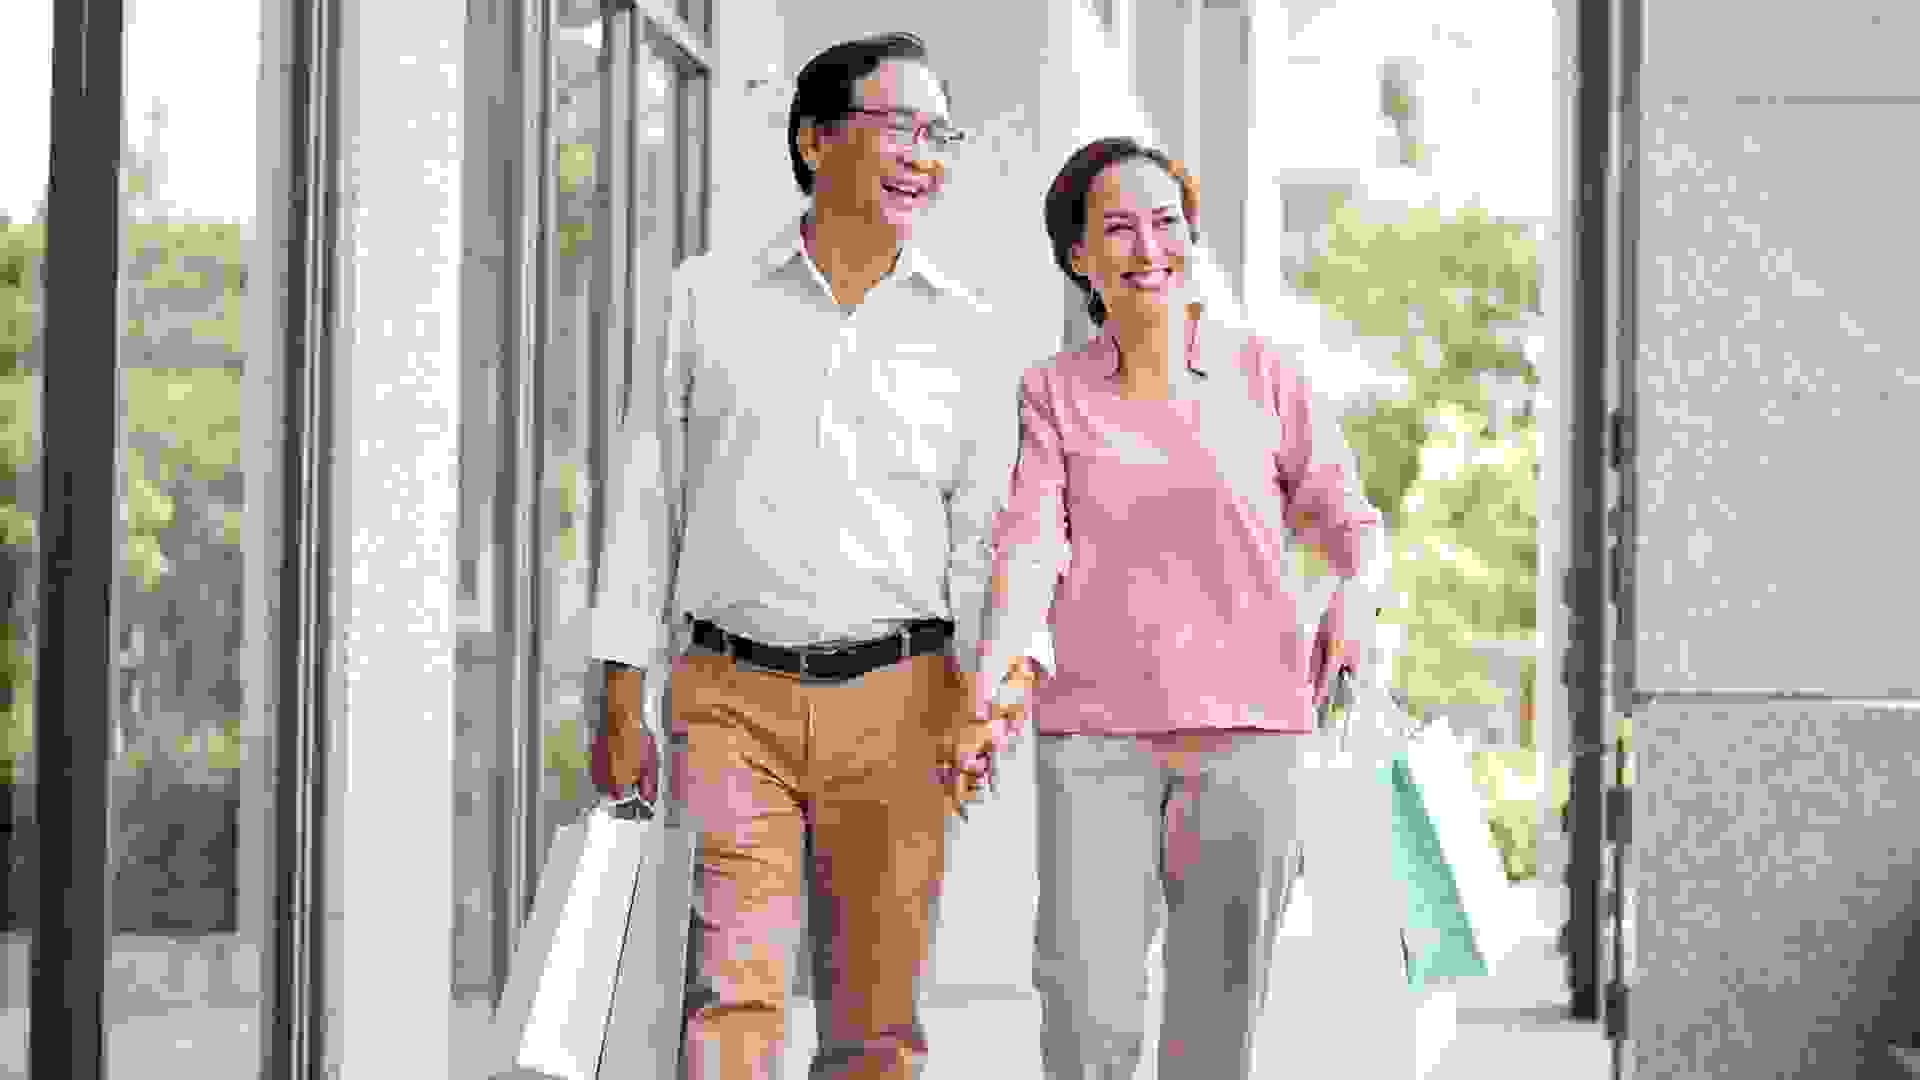 Happy Elderly Couple Shopping stock photo